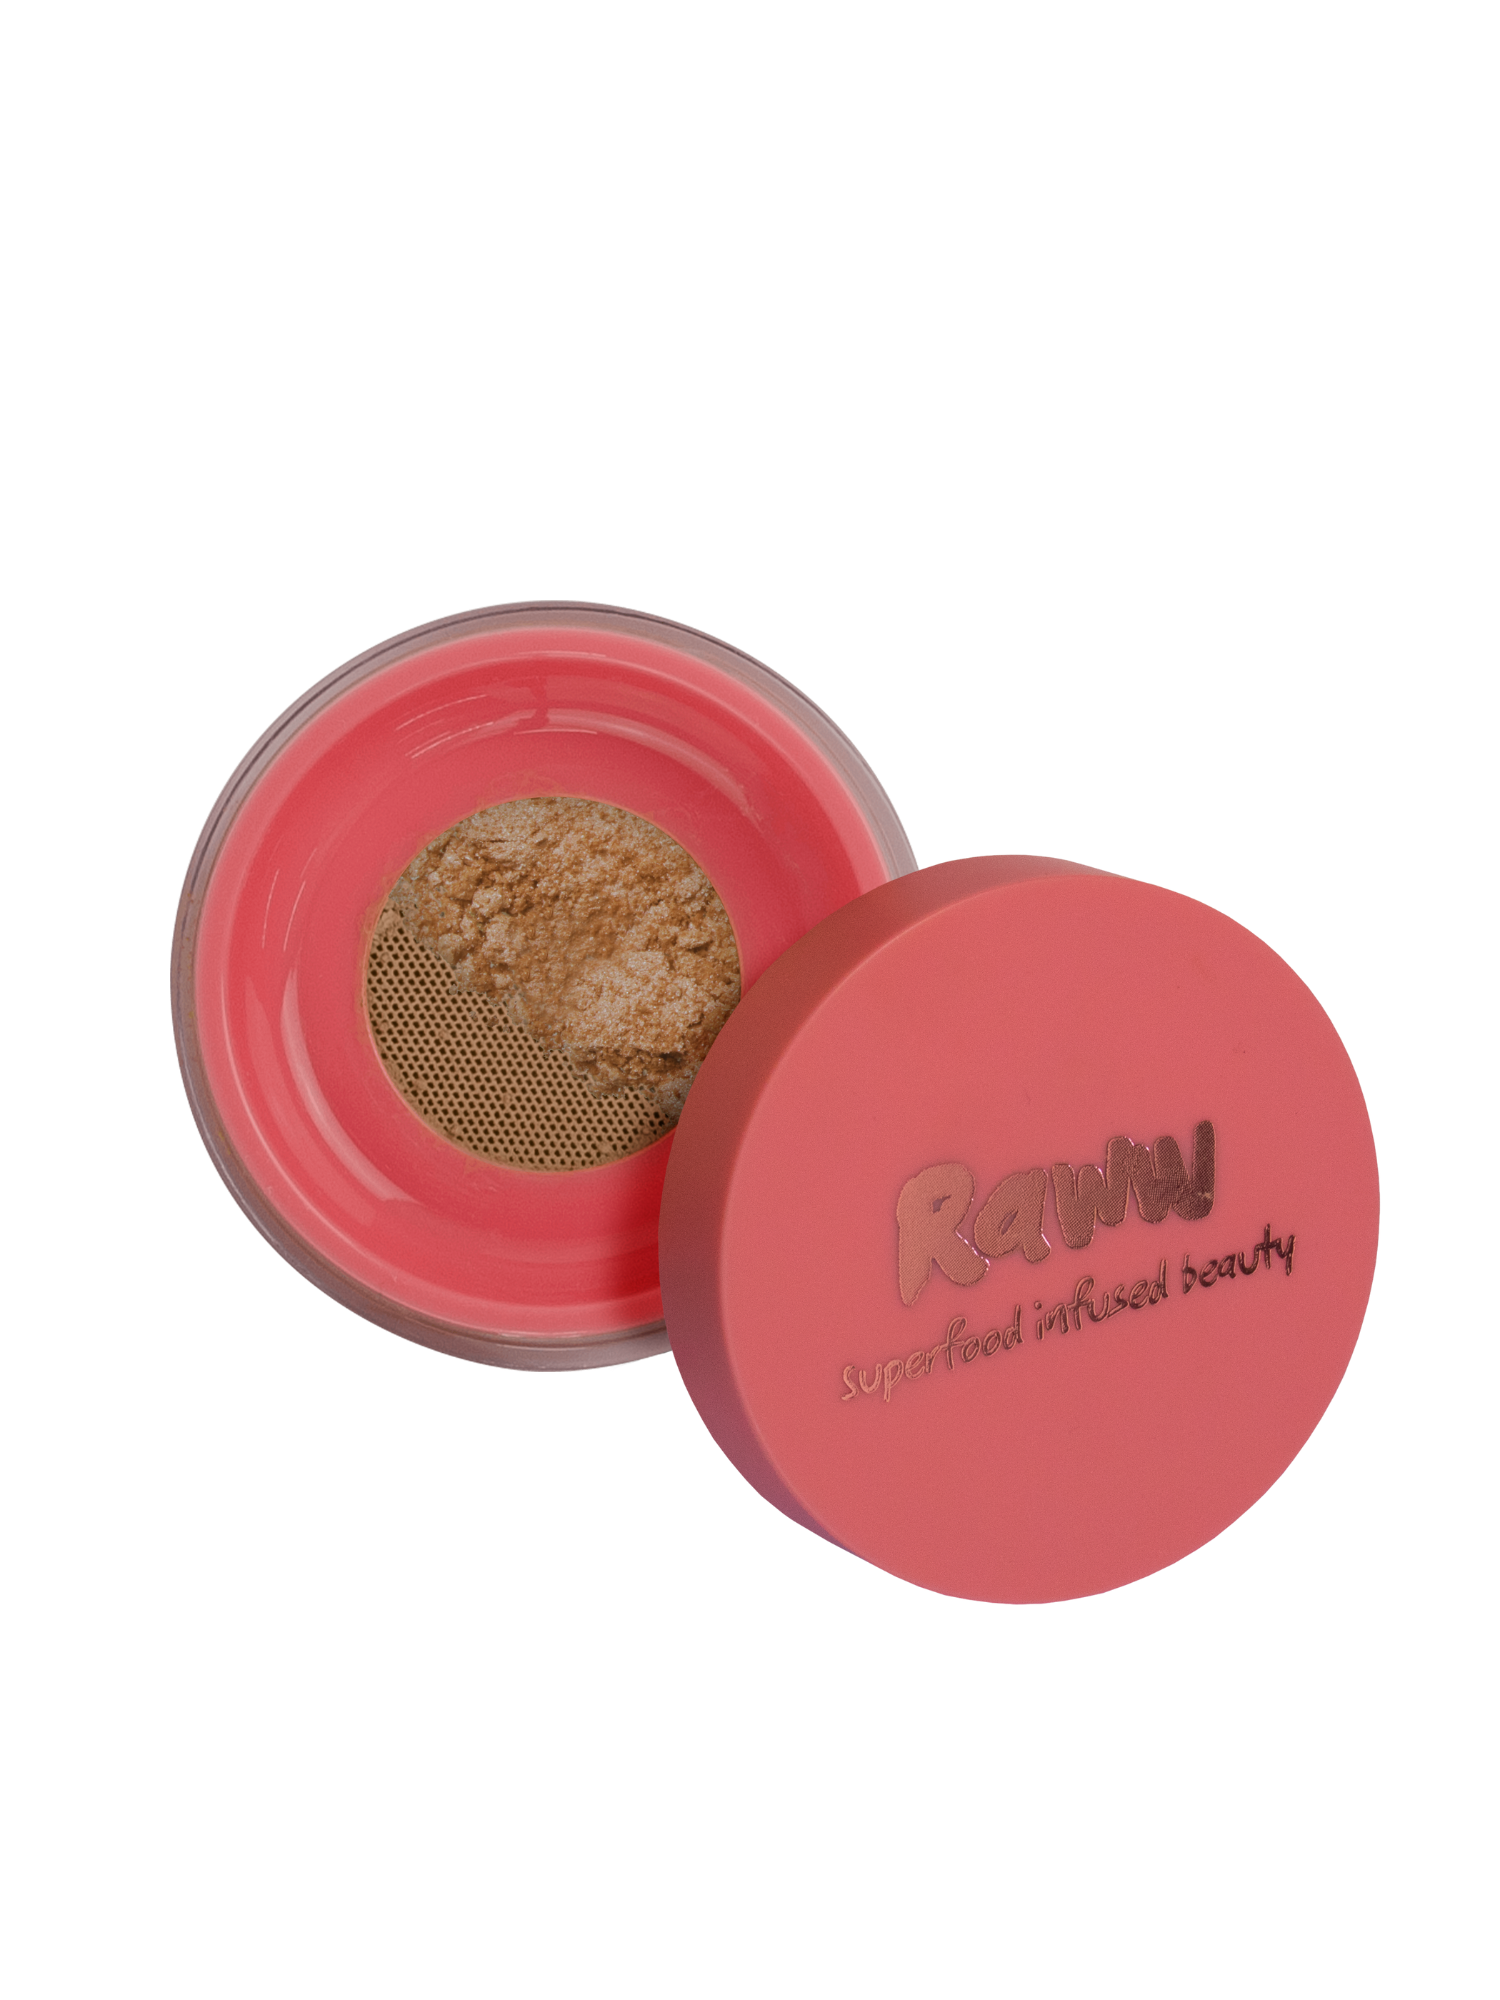 Pomegranate Complexion Powder - Medium Tan G2